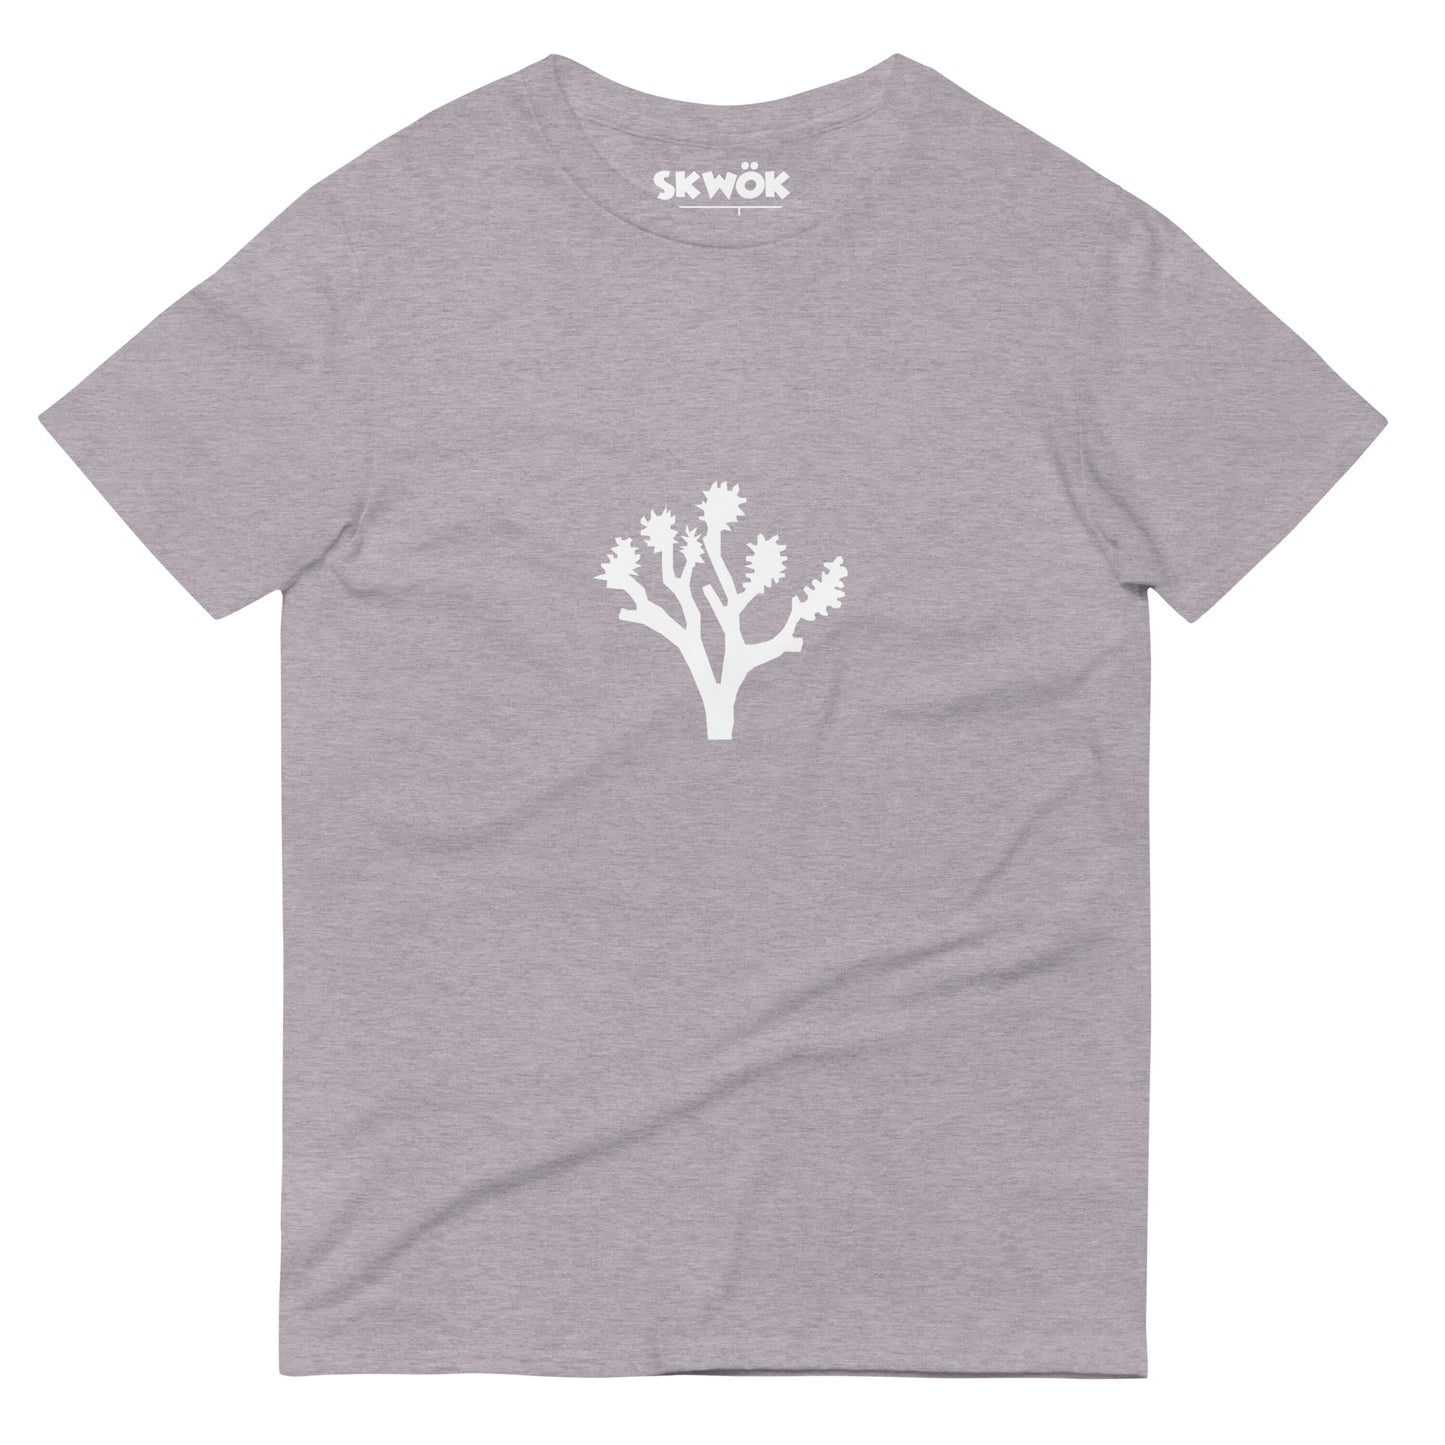 Kranik Brand / T-shirt / Joshua Tree I